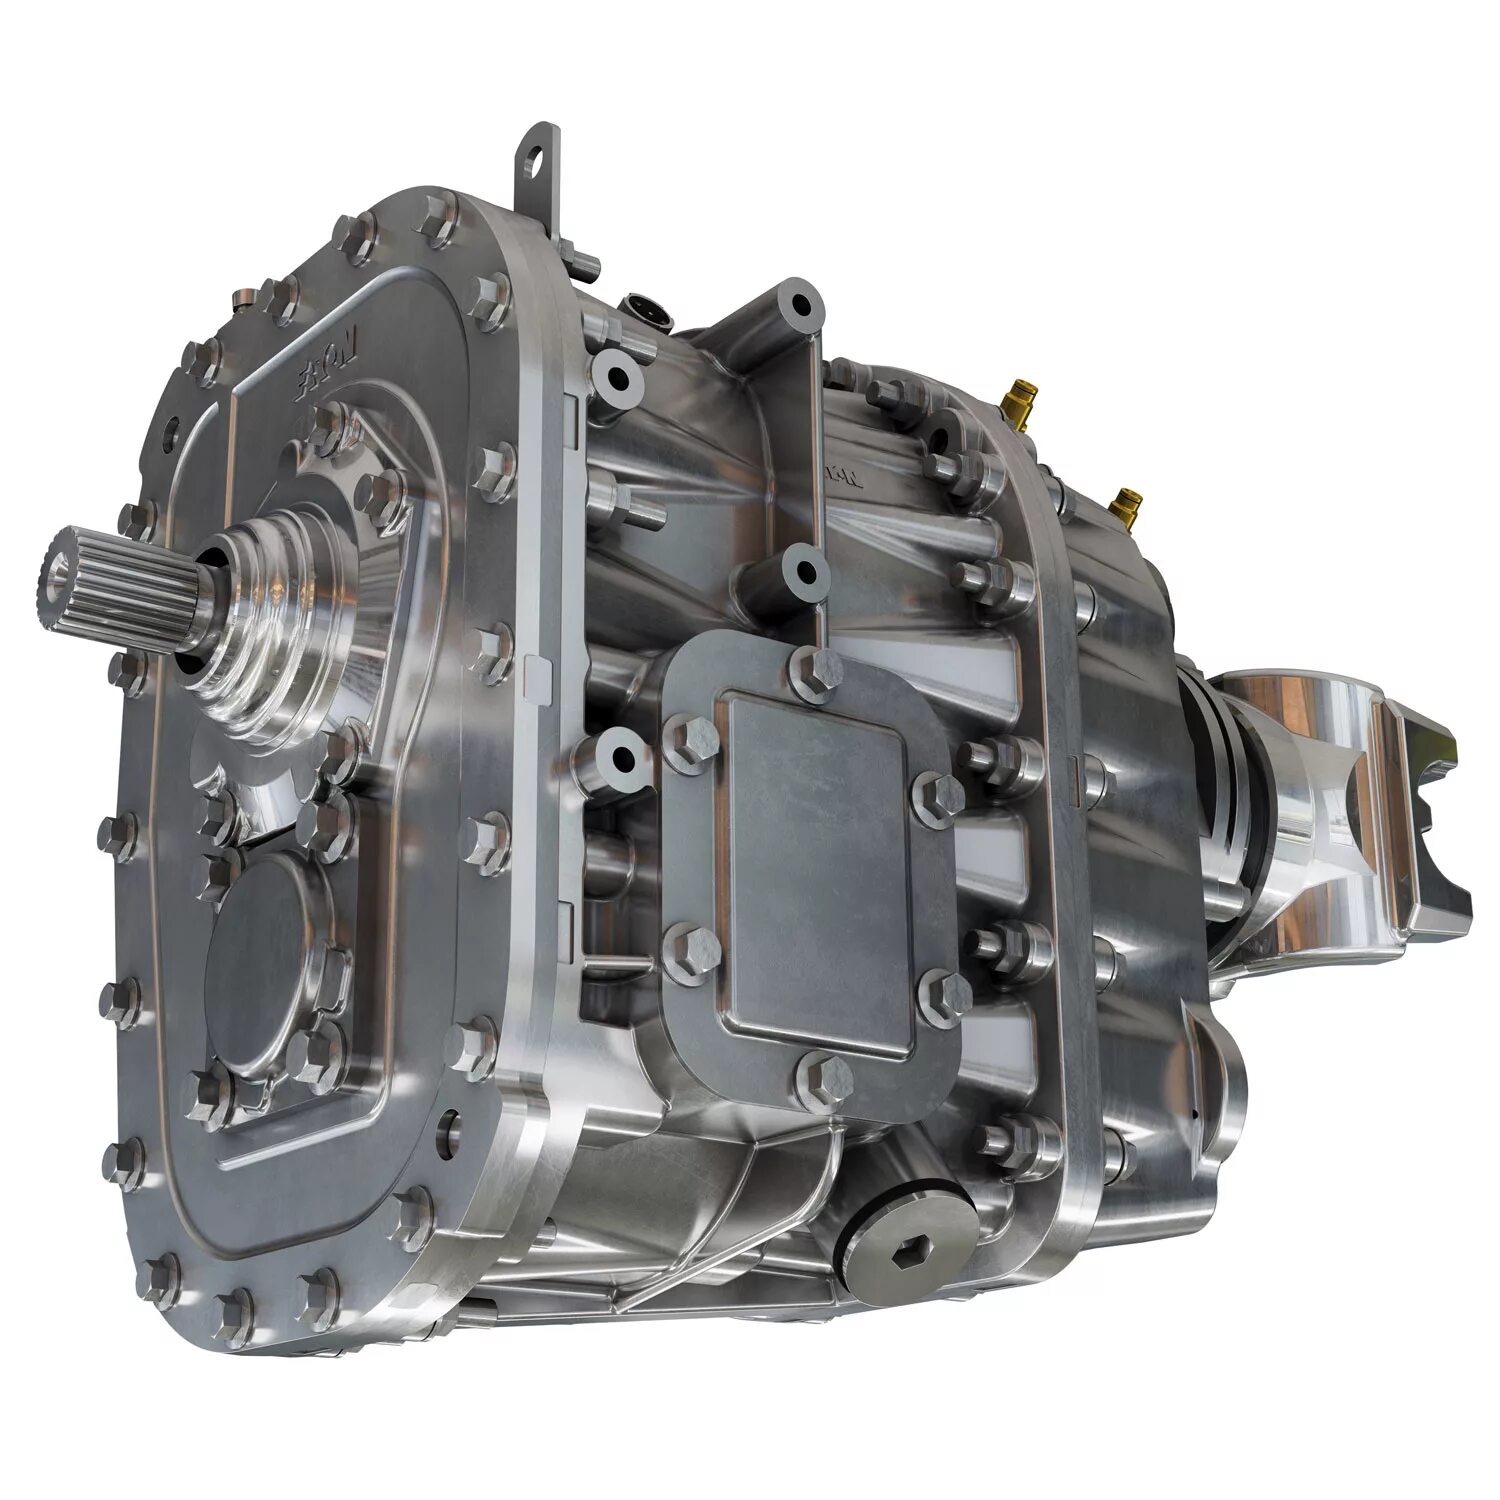 Eaton transmission. Eaton Fuller transmission 8 Speed. Eaton 6 Speed Kit. Eaton 18 Speed Gear Box.